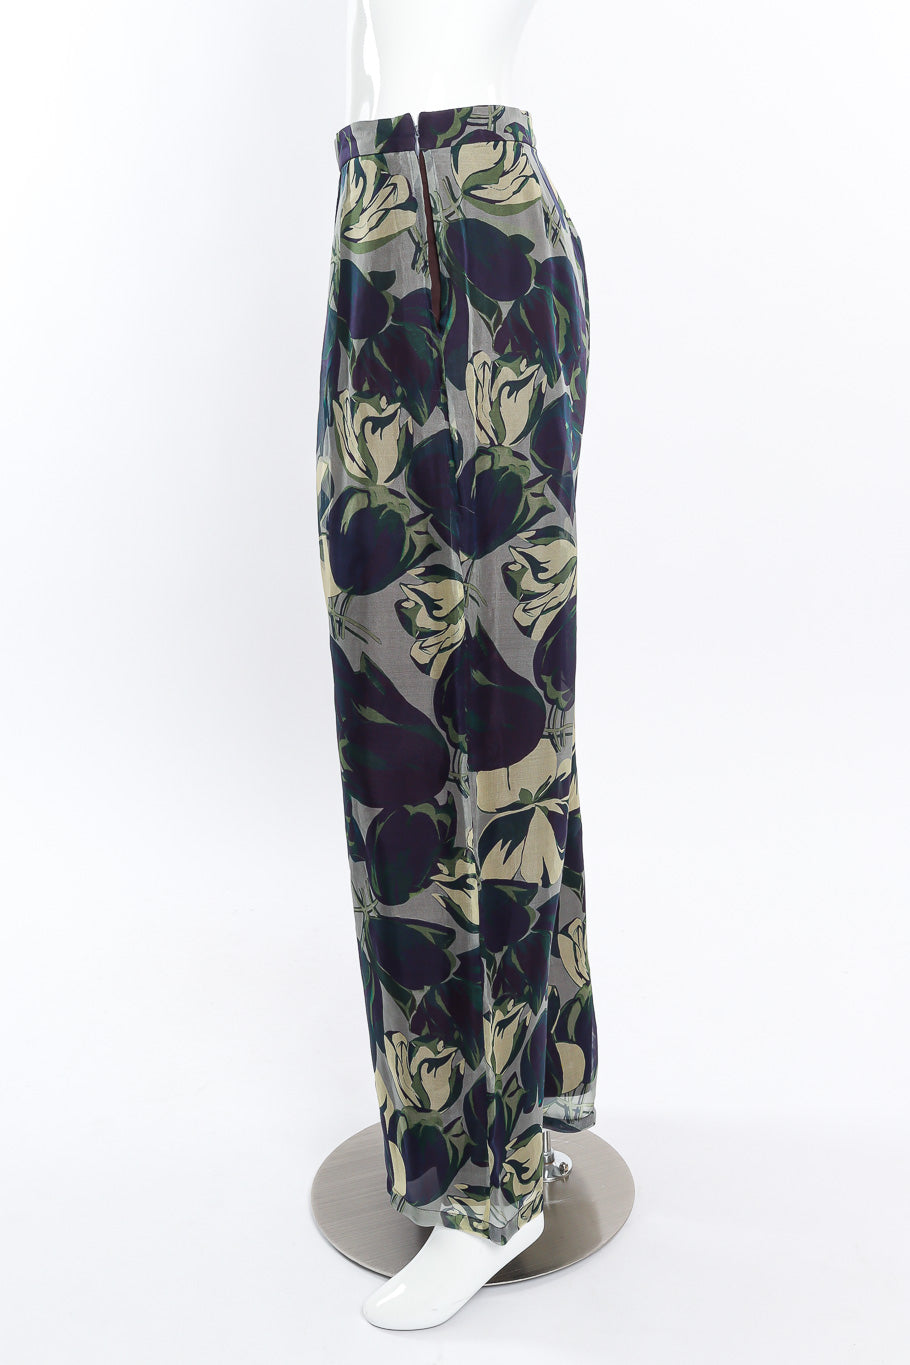 Dries Van Noten Floral Silk Lounge Pant side view on mannequin @Recessla